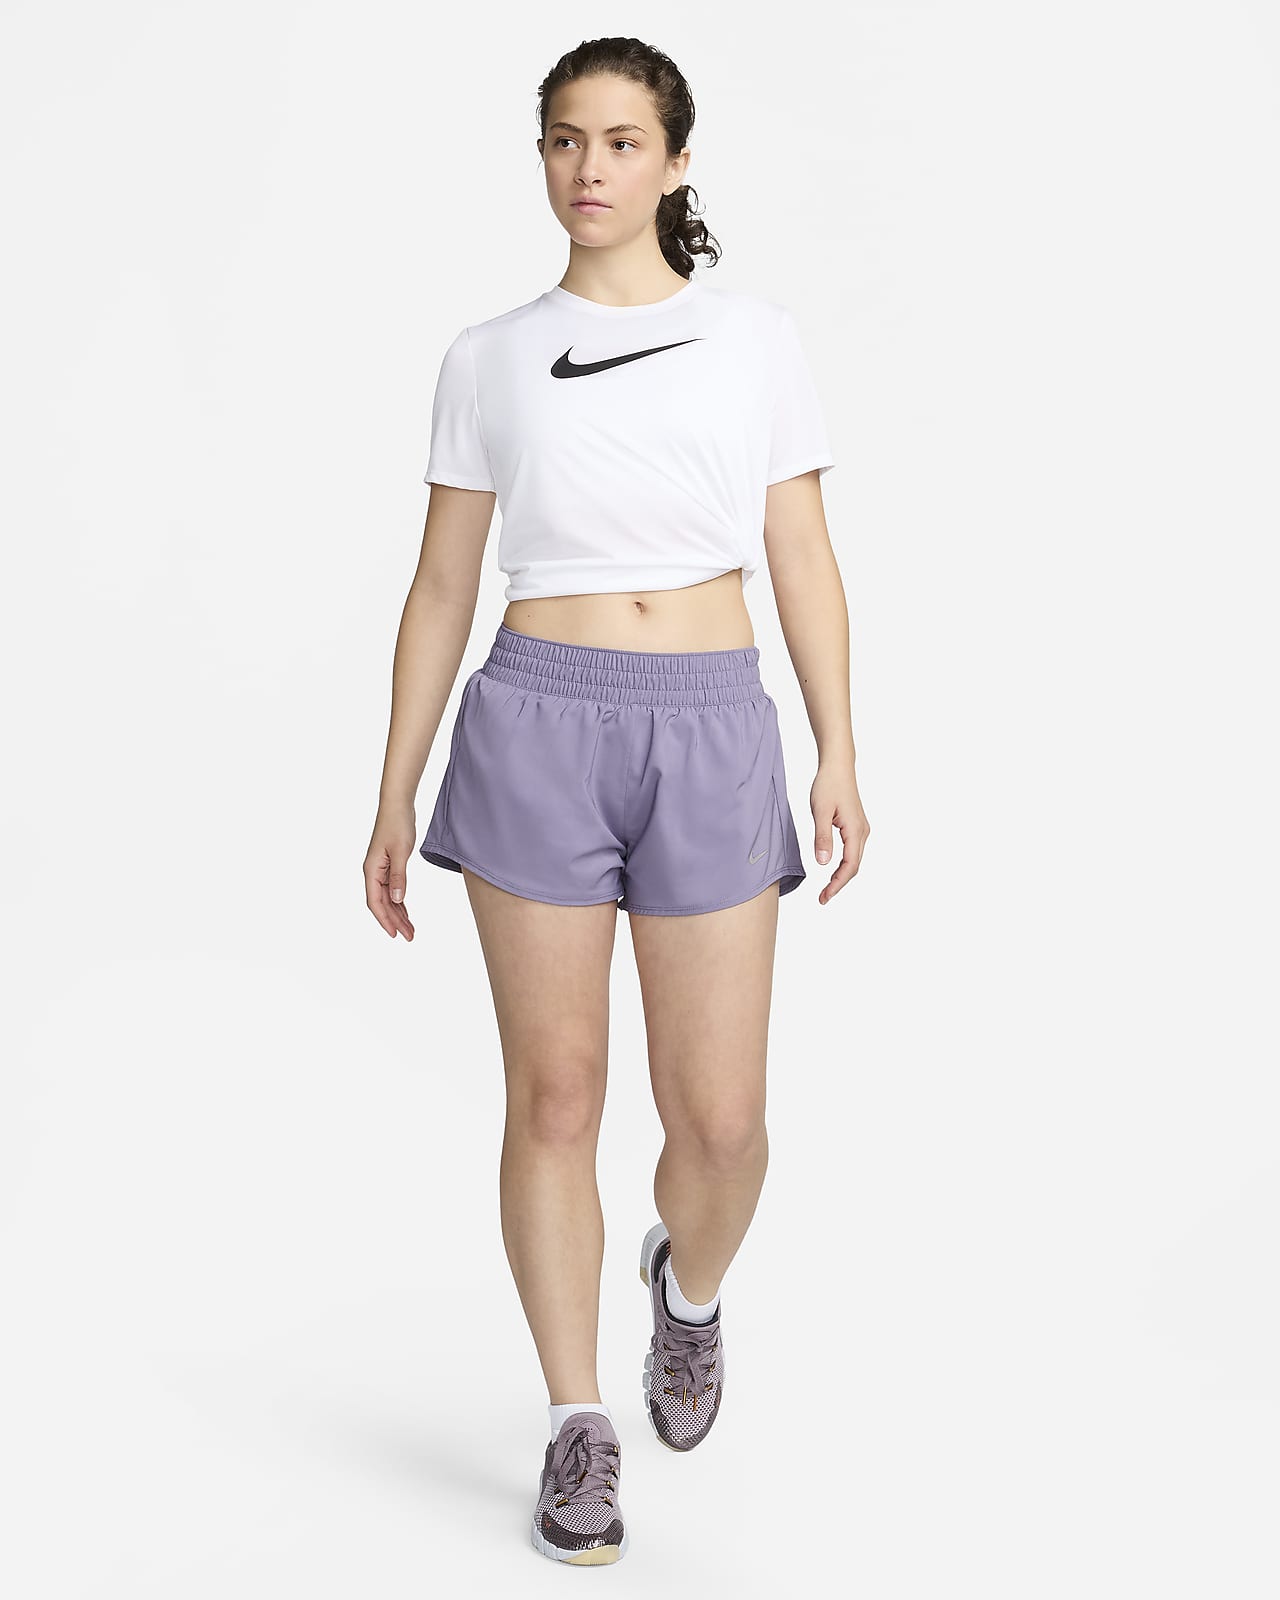 Nike Dri-FIT One Women's Mid-Rise Training Leggings, Honeydew/Alligator, XS  Regular US at  Women's Clothing store